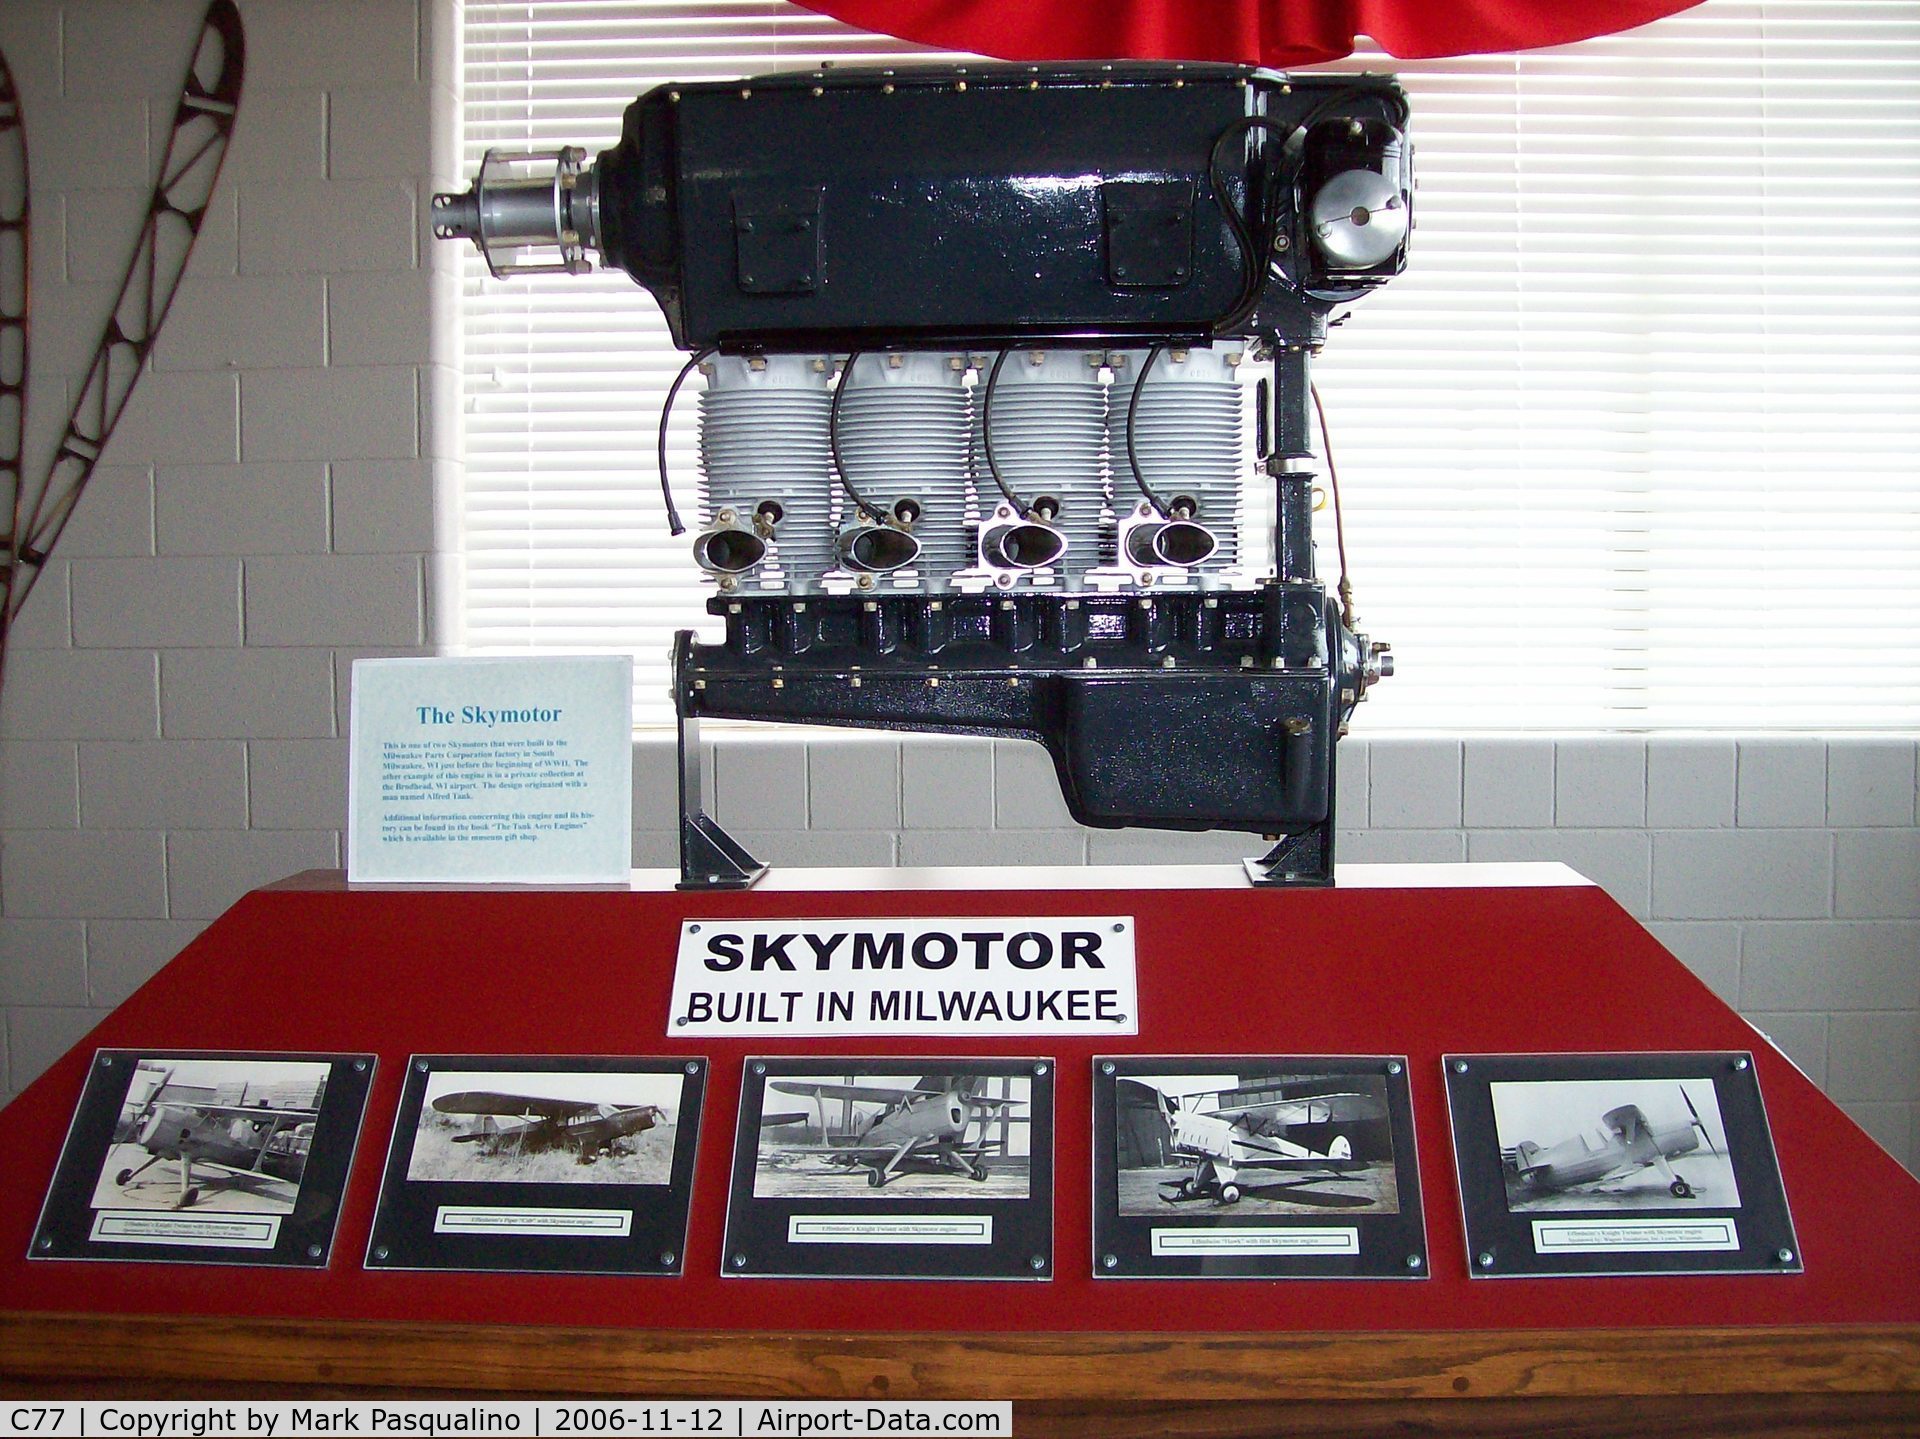 Poplar Grove Airport (C77) - Skymotor engine on display at local air museum